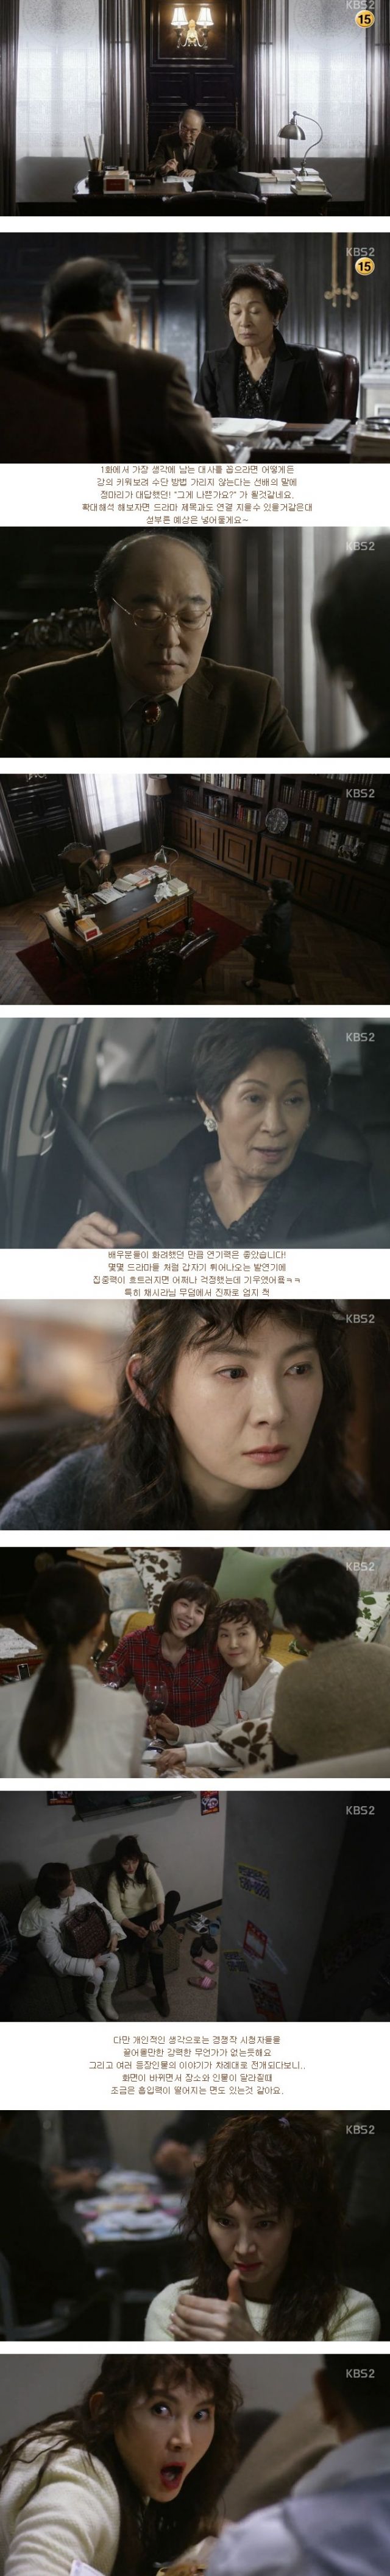 episode 1 captures for the Korean drama 'Unkind Women'